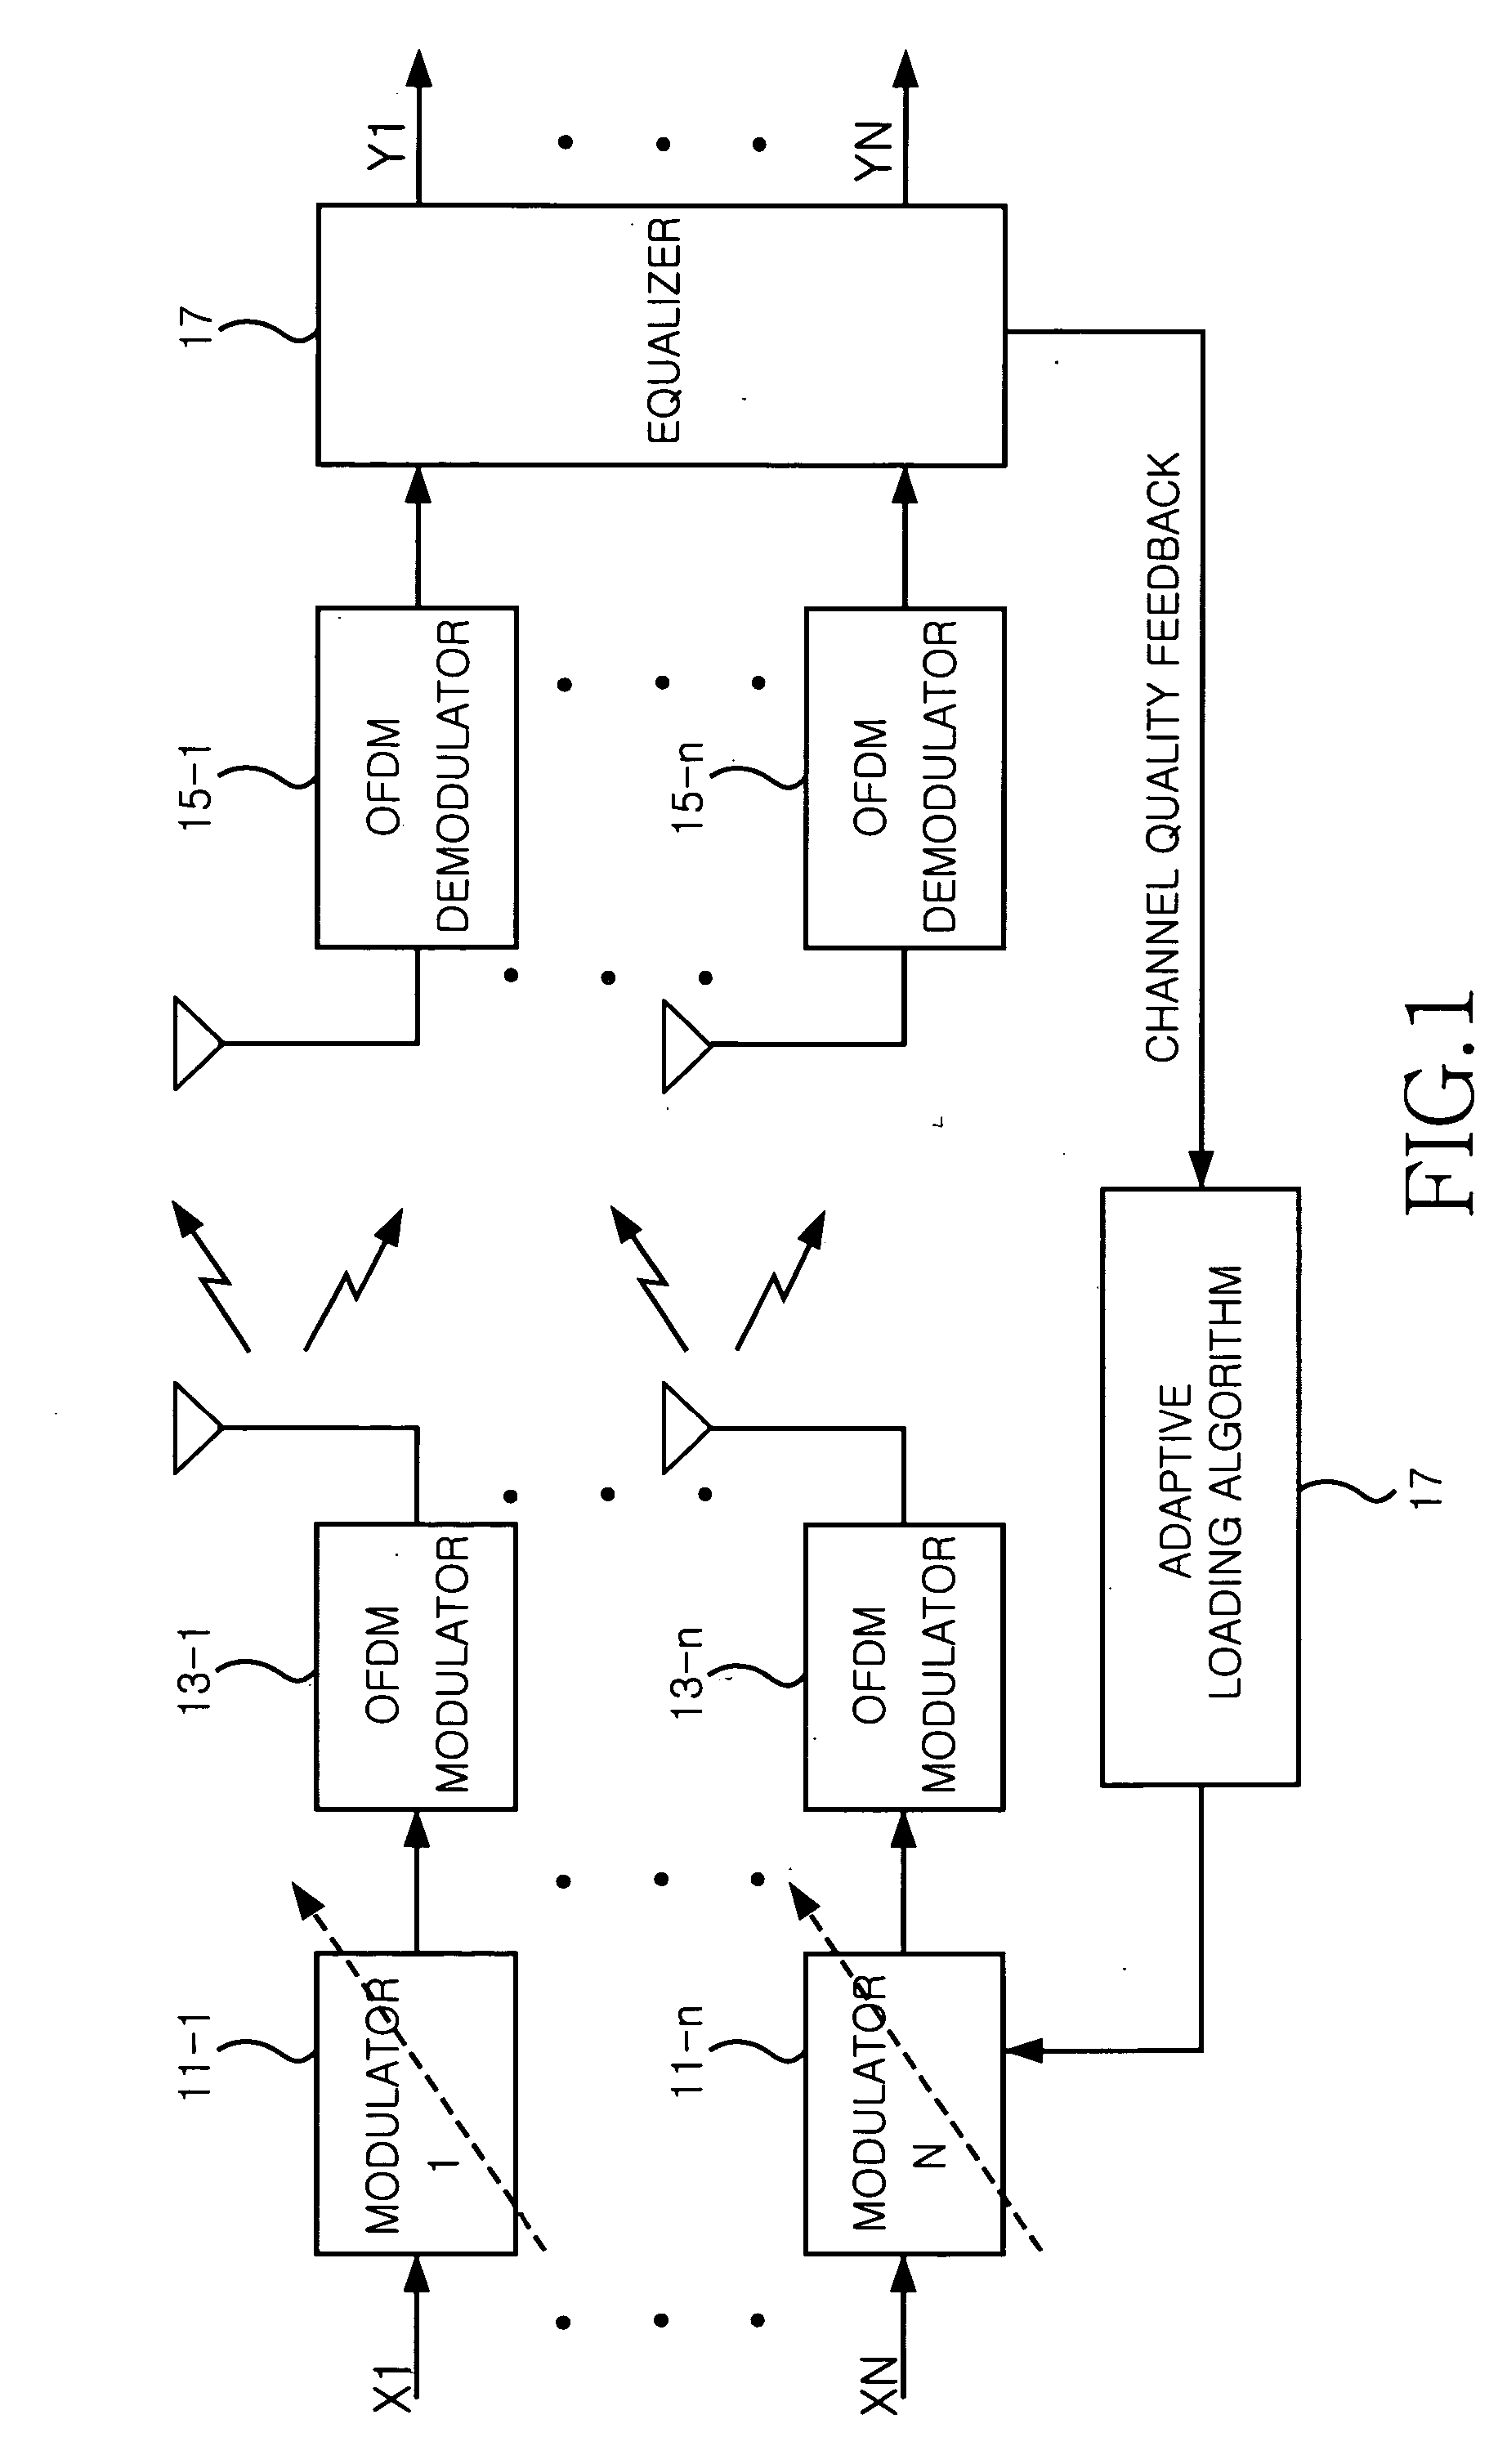 Adaptive bit/power loading technique for a multicarrier communication system